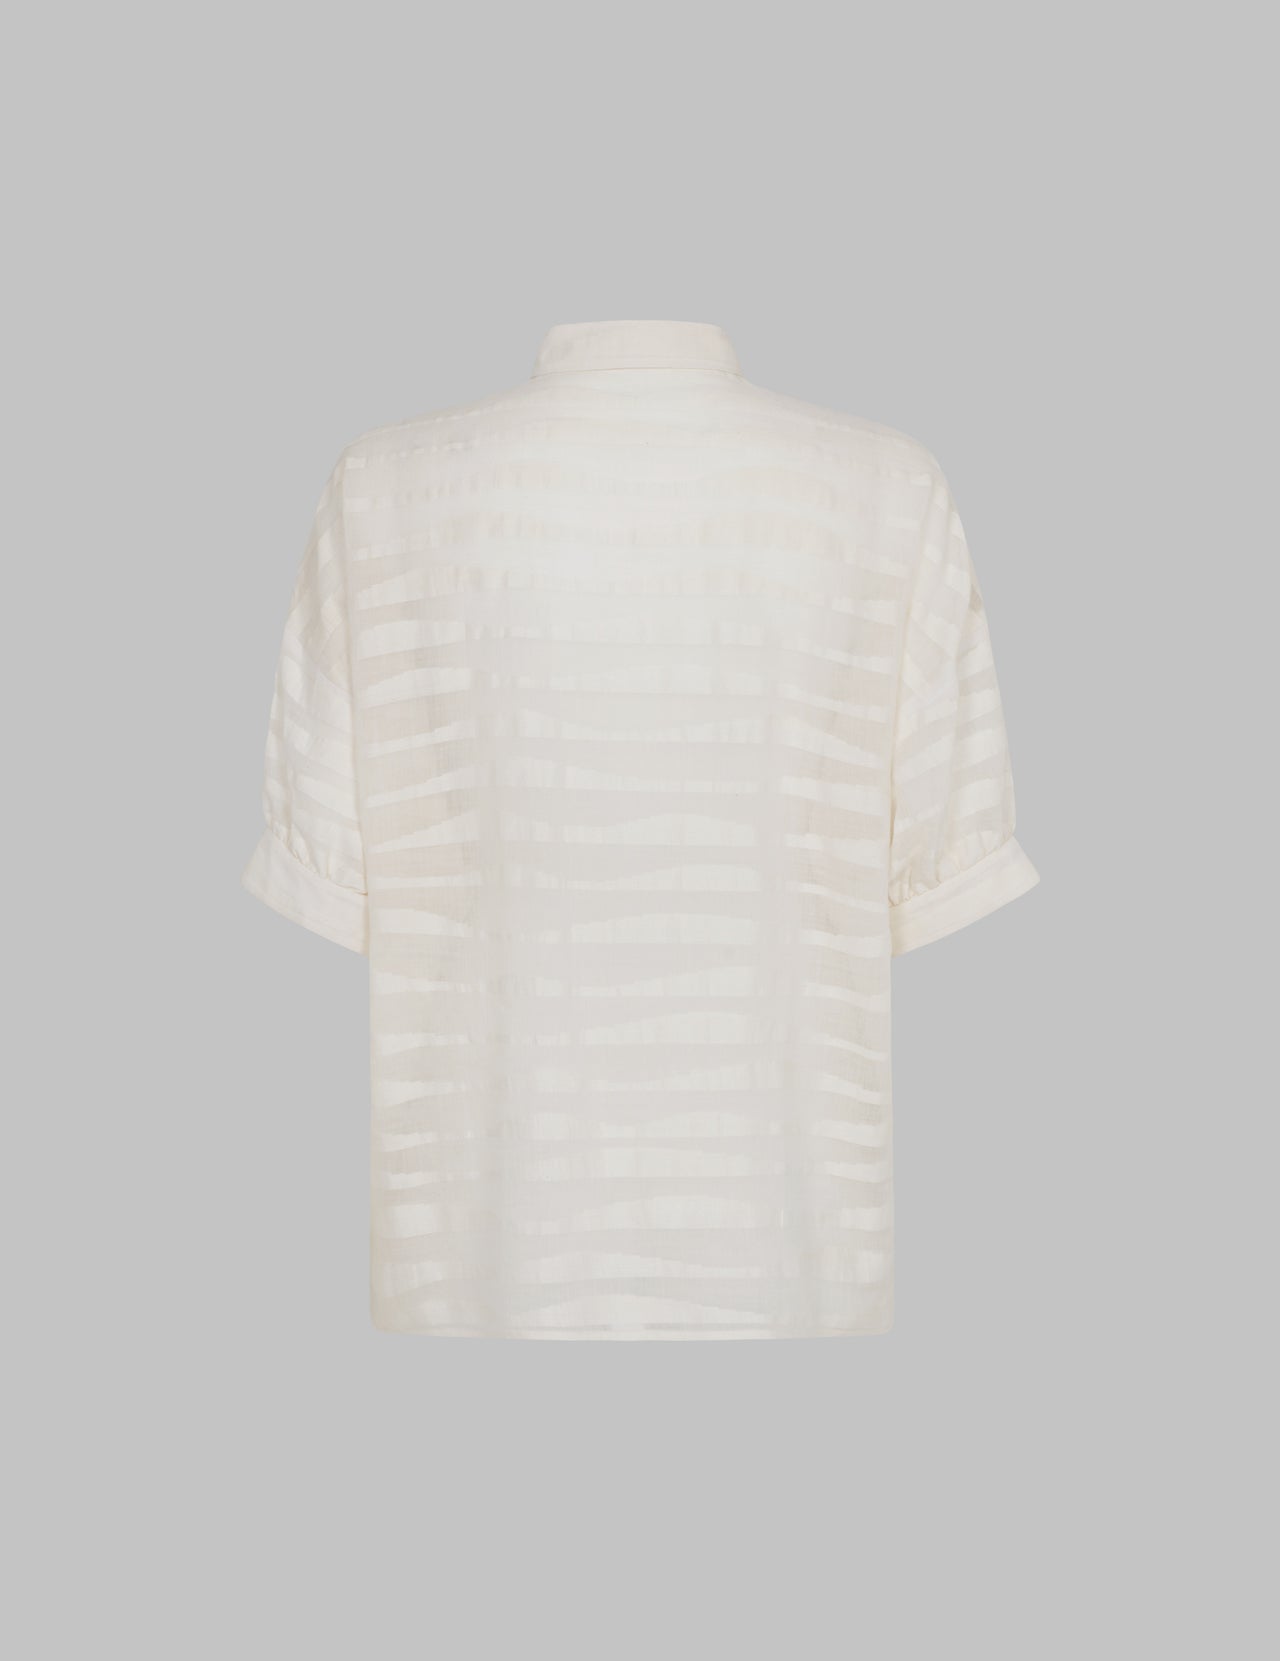  Off White Hand Woven Jamdani Cotton Gathered Sleeve Shirt 